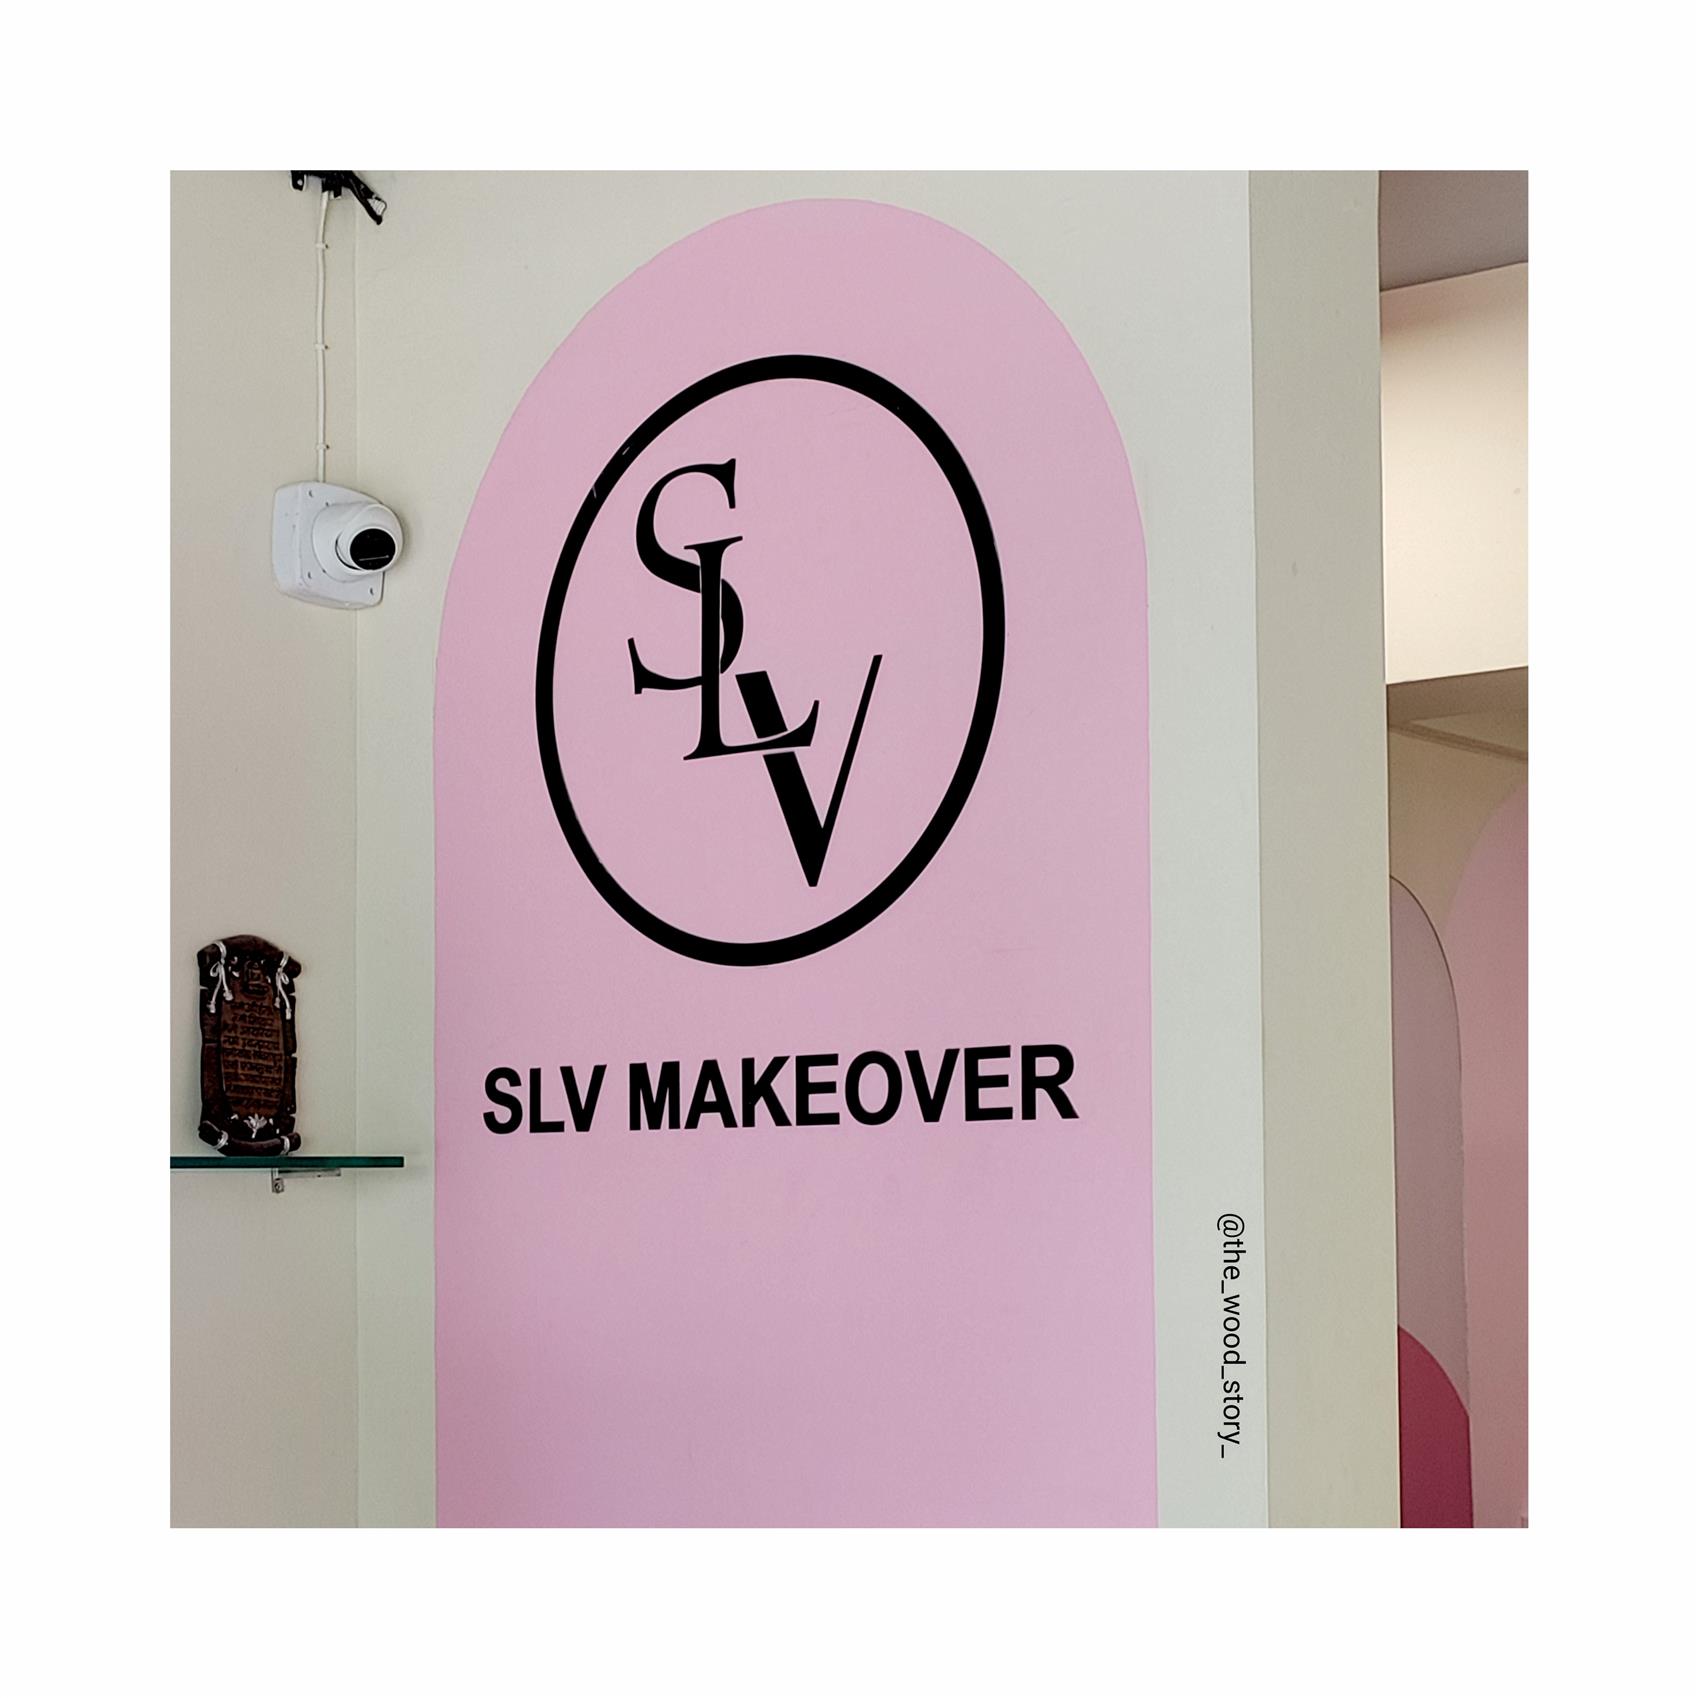 SLV - Slettvoll MÃ¸bler AS Trademark Registration